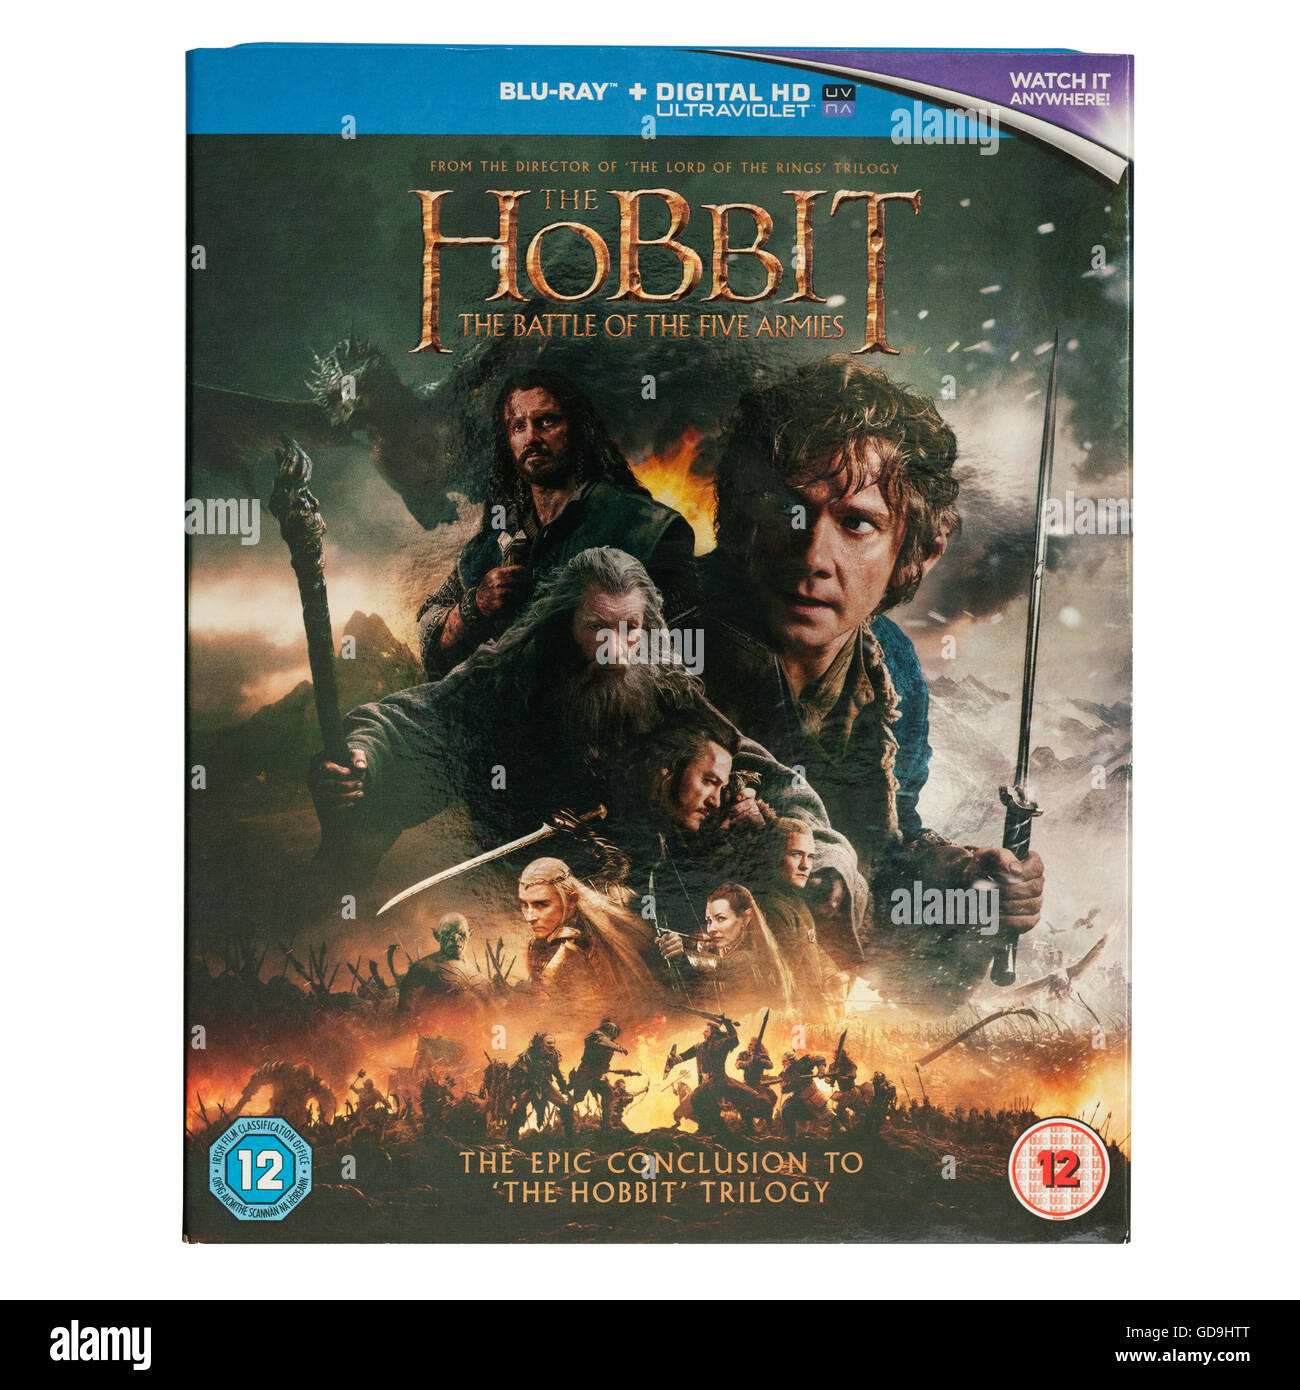 https://c8.alamy.com/compes/gd9htt/el-hobbit-peliculas-blu-ray-dvd-la-batalla-de-los-cinco-ejercitos-sobre-un-fondo-blanco-gd9htt.jpg